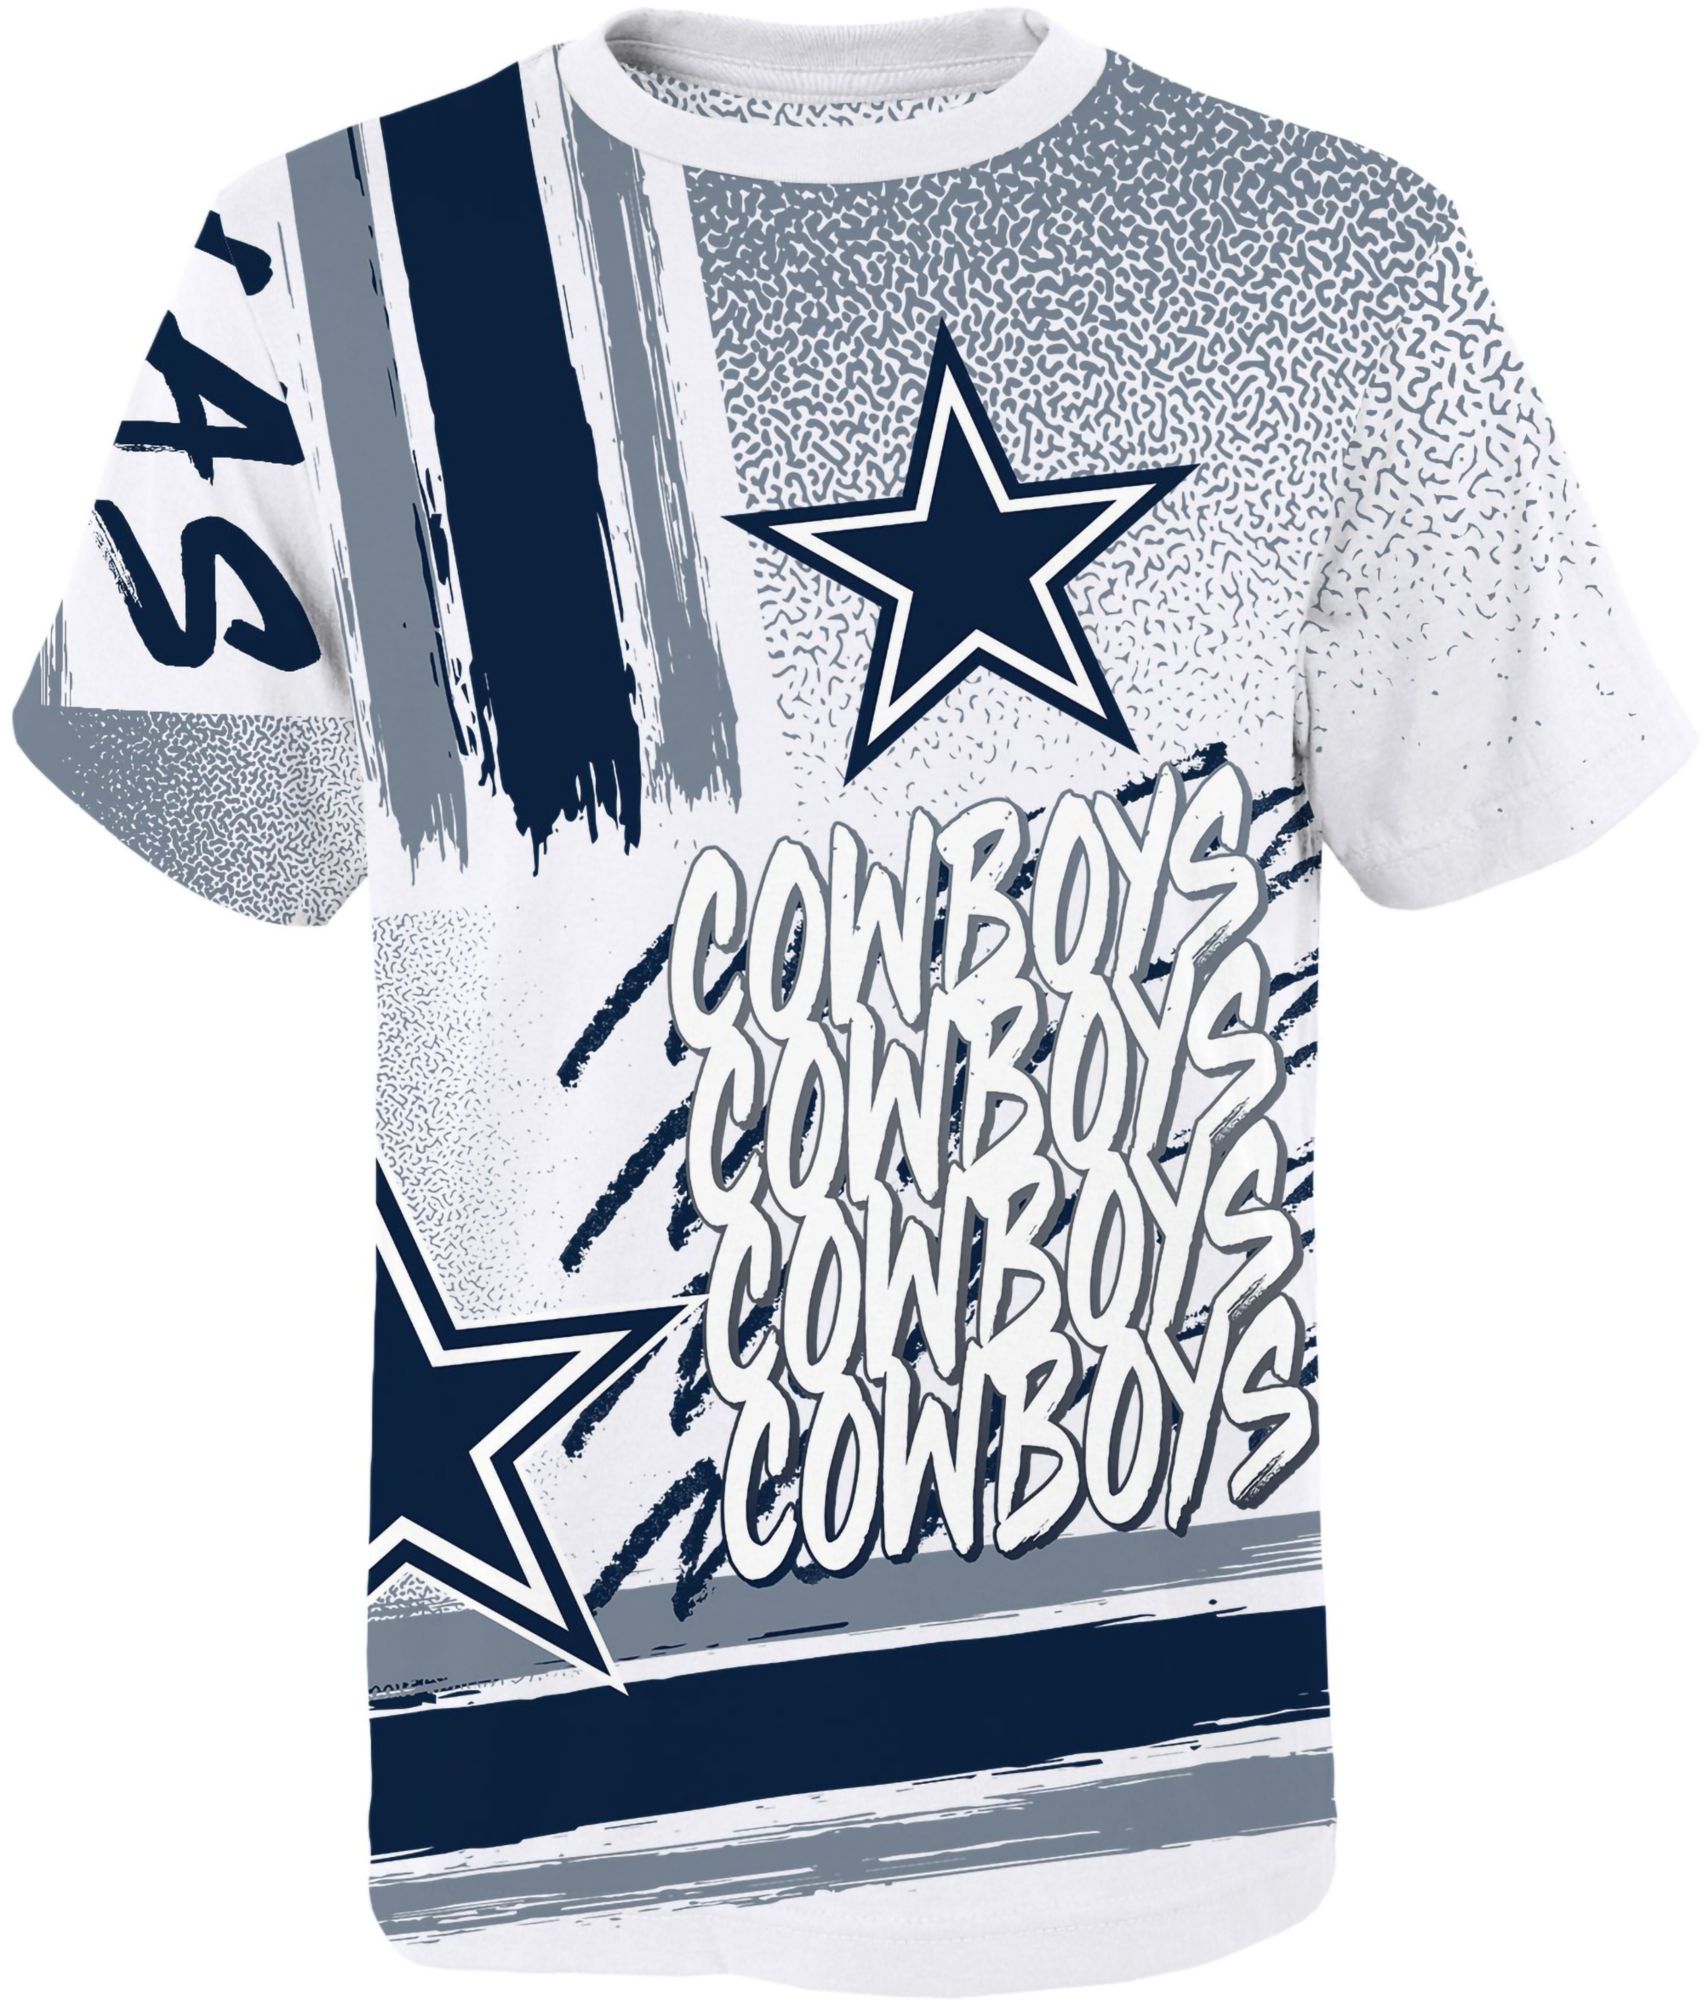 Cowboys volleyball apparel